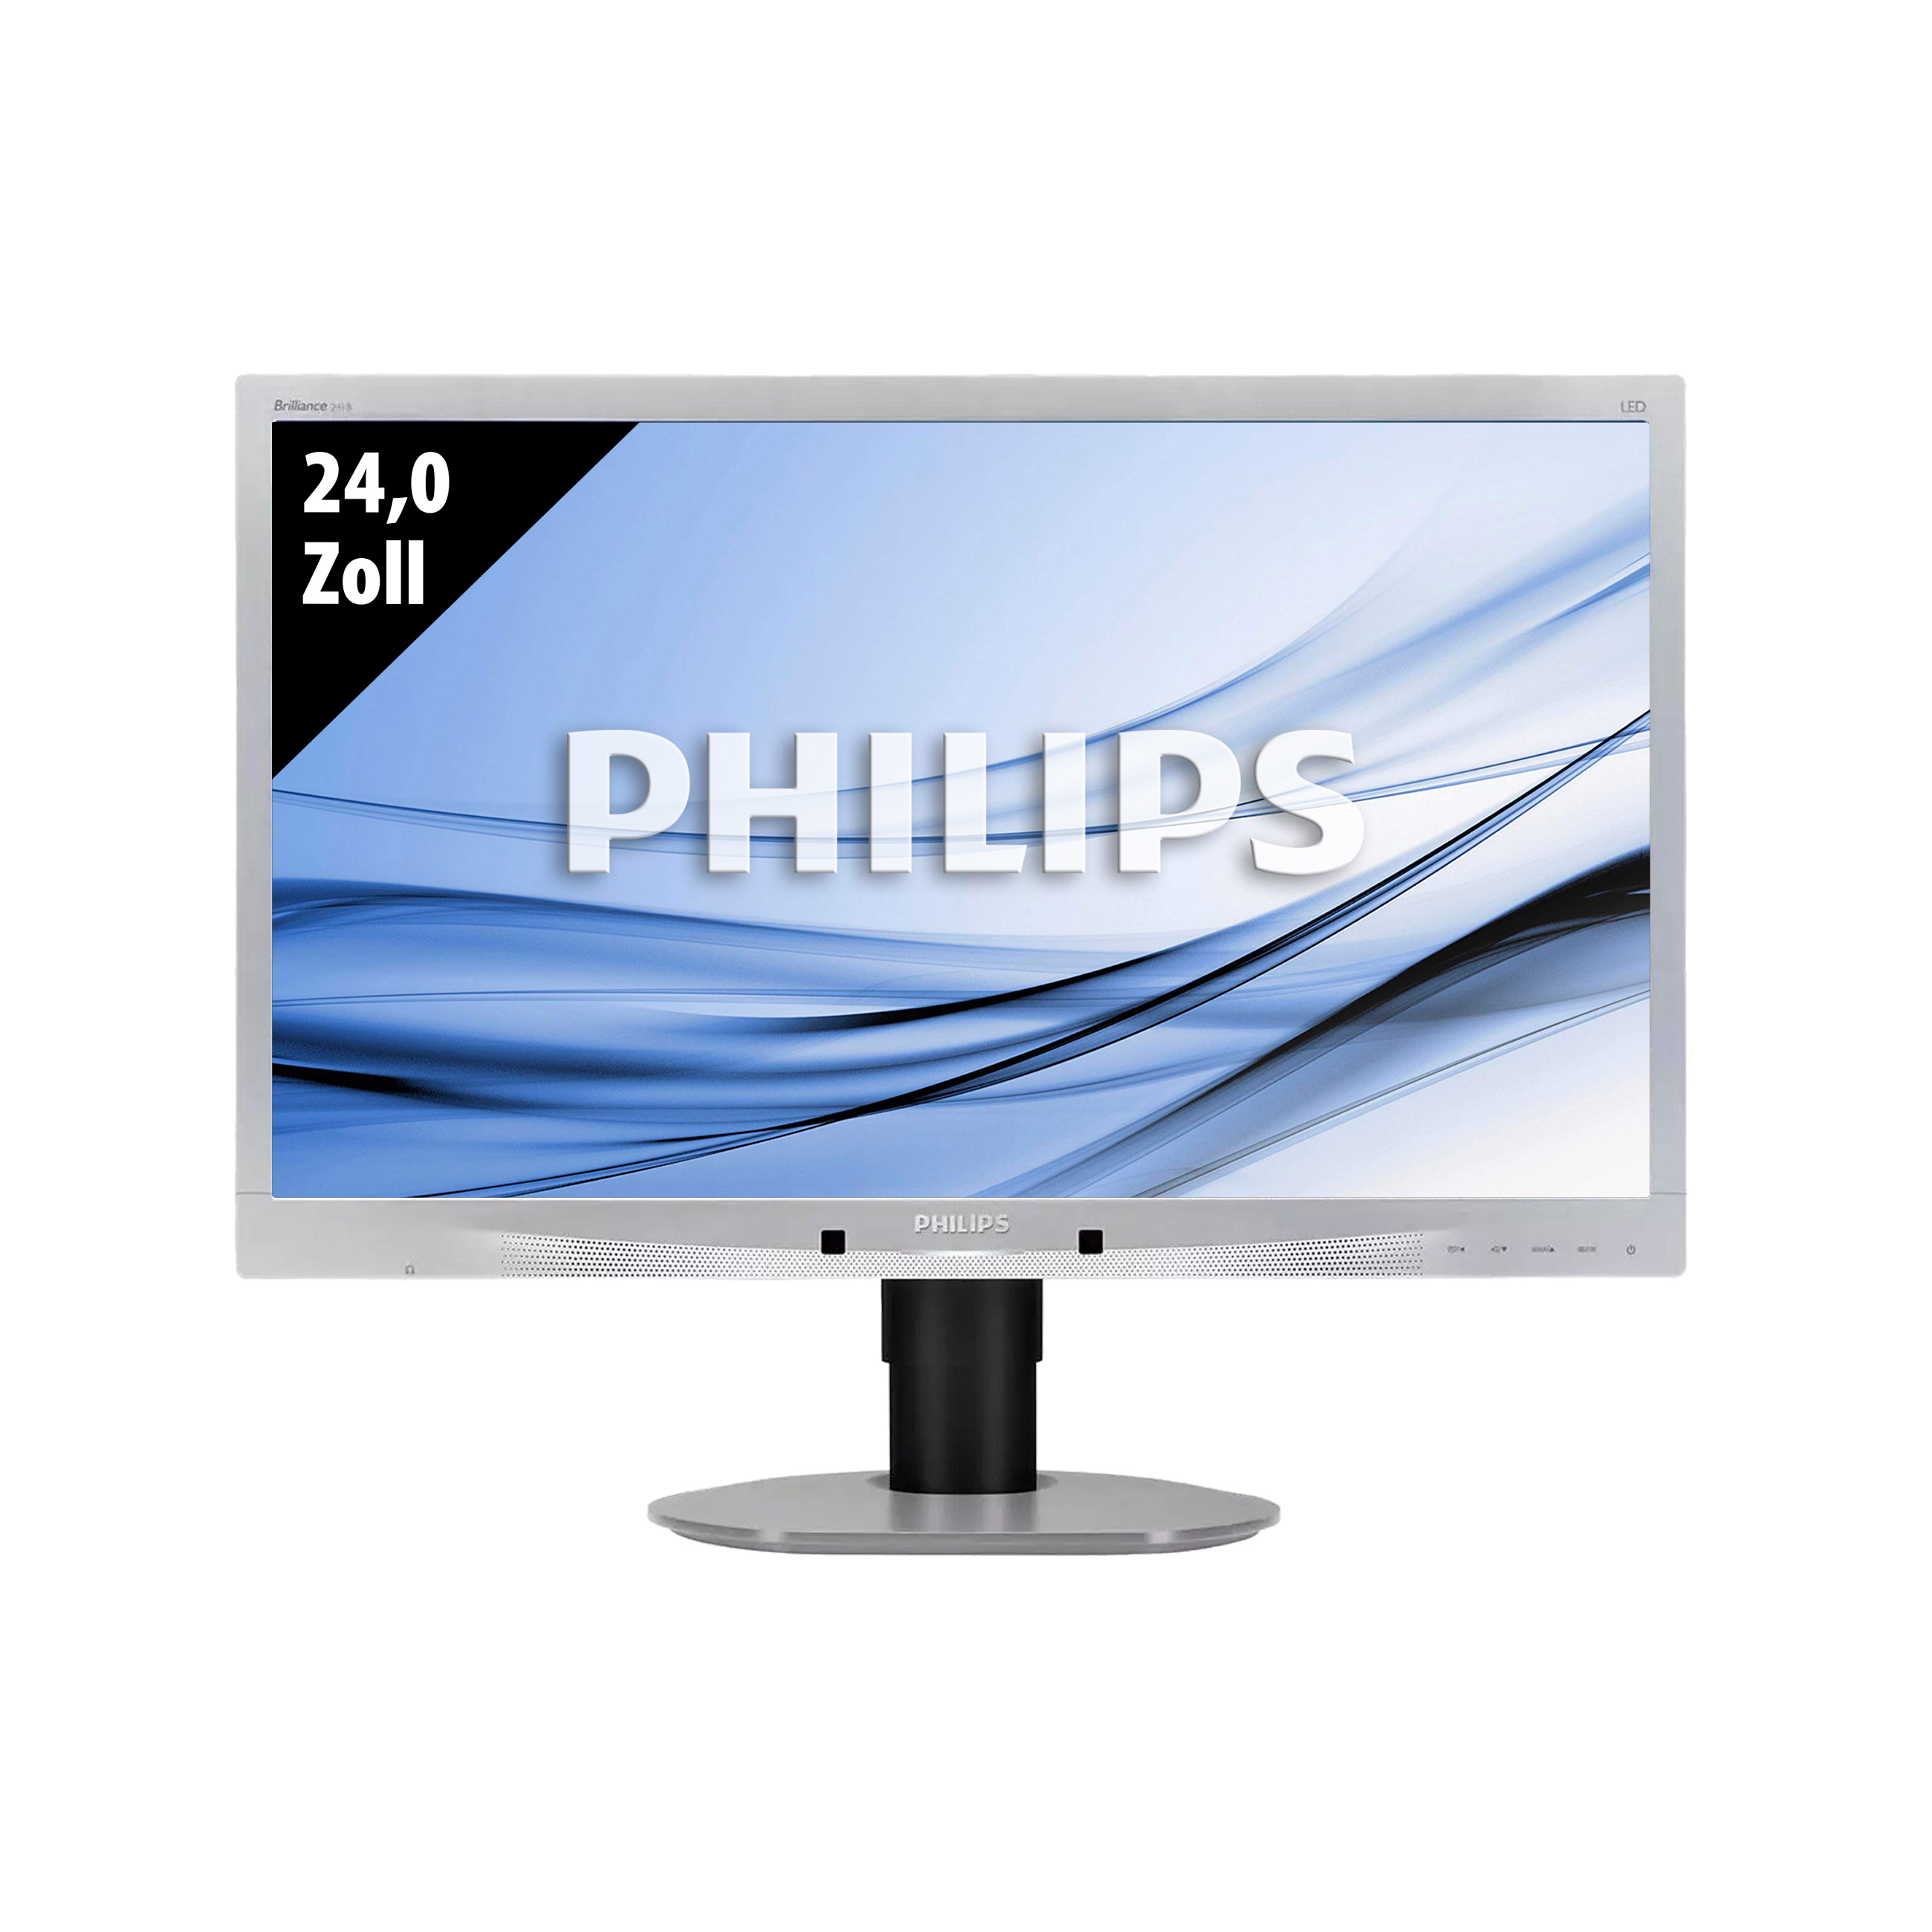 Philips Brilliance 241B4LPYCS - 1920 x 1080 - FHD - 24,0 Zoll - 5 ms - Silber